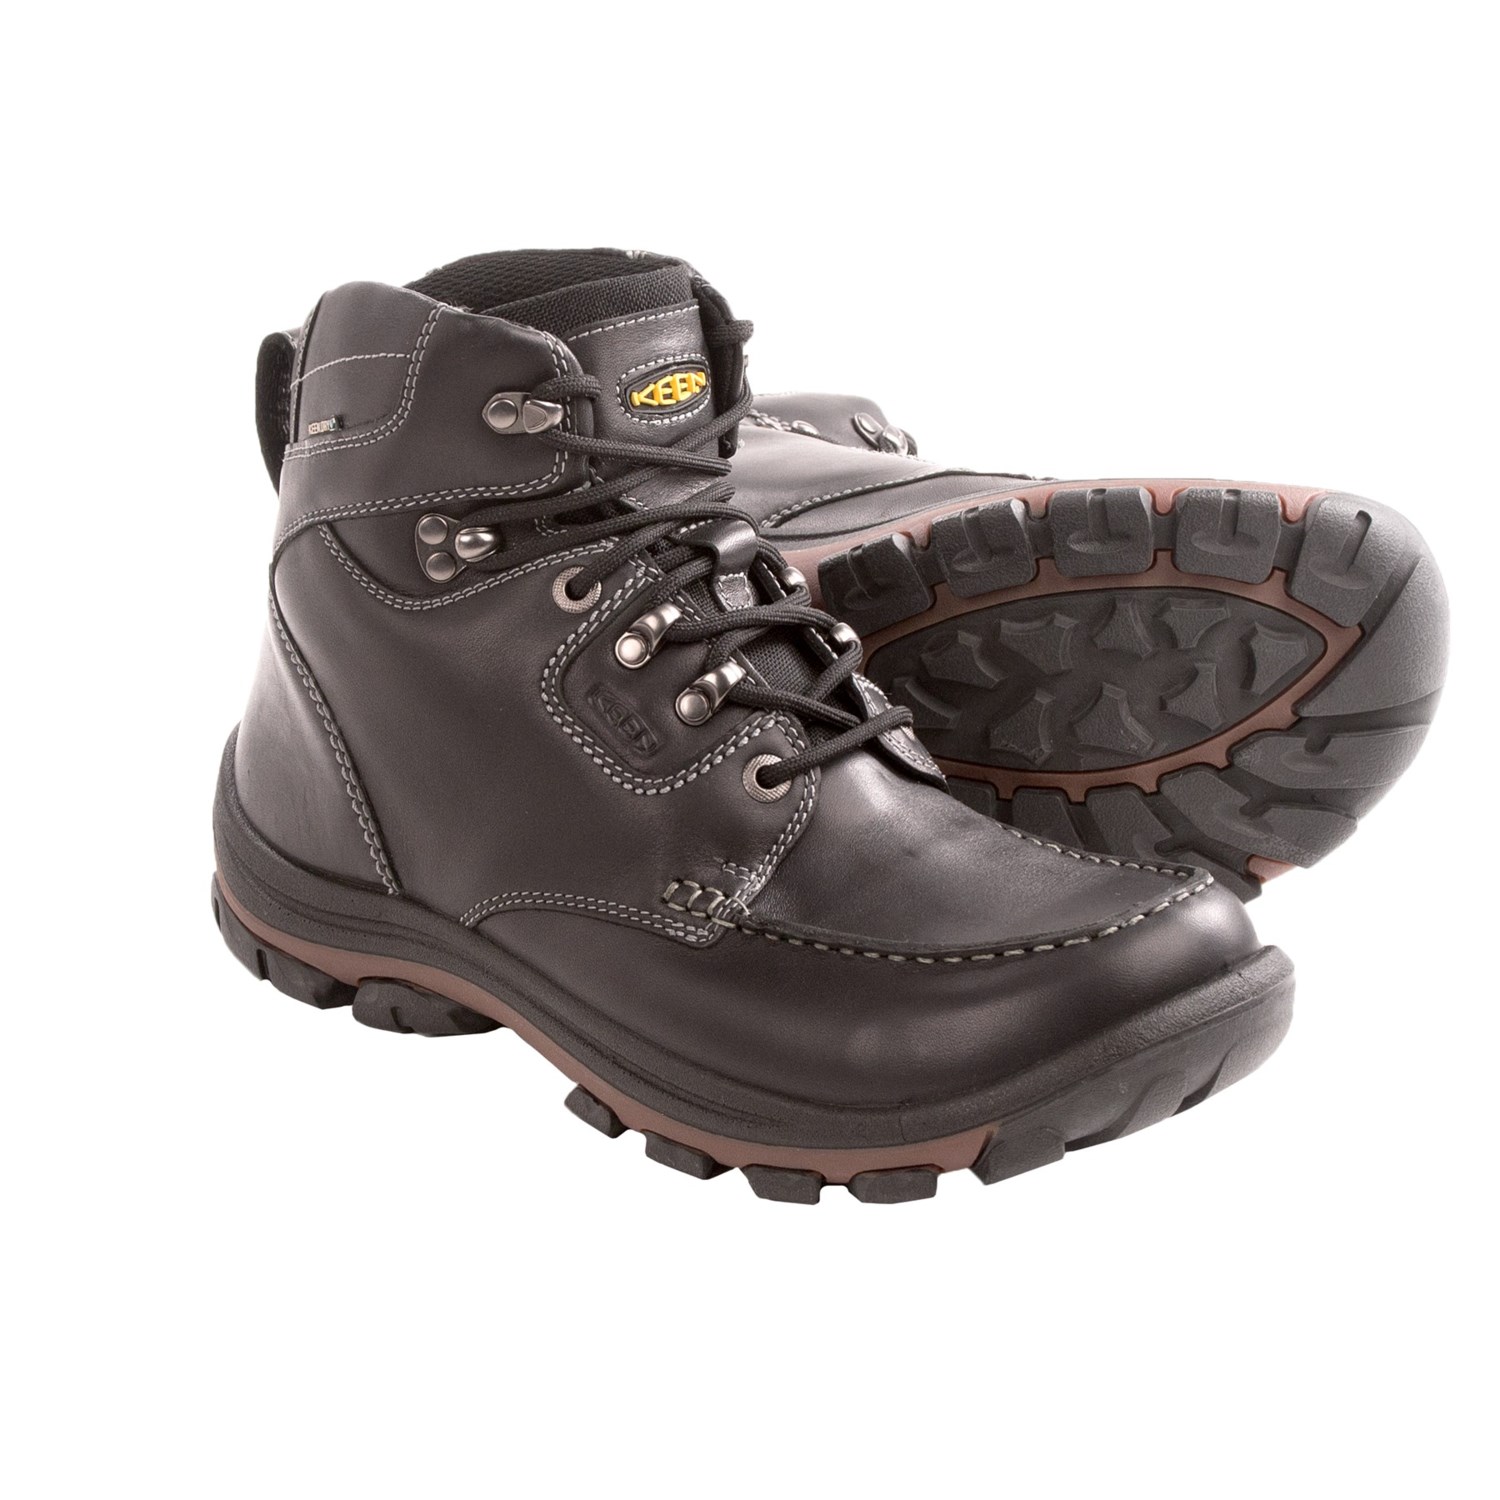 Keen NoPo Boots - Waterproof, Leather (For Men) in Black Full Grain